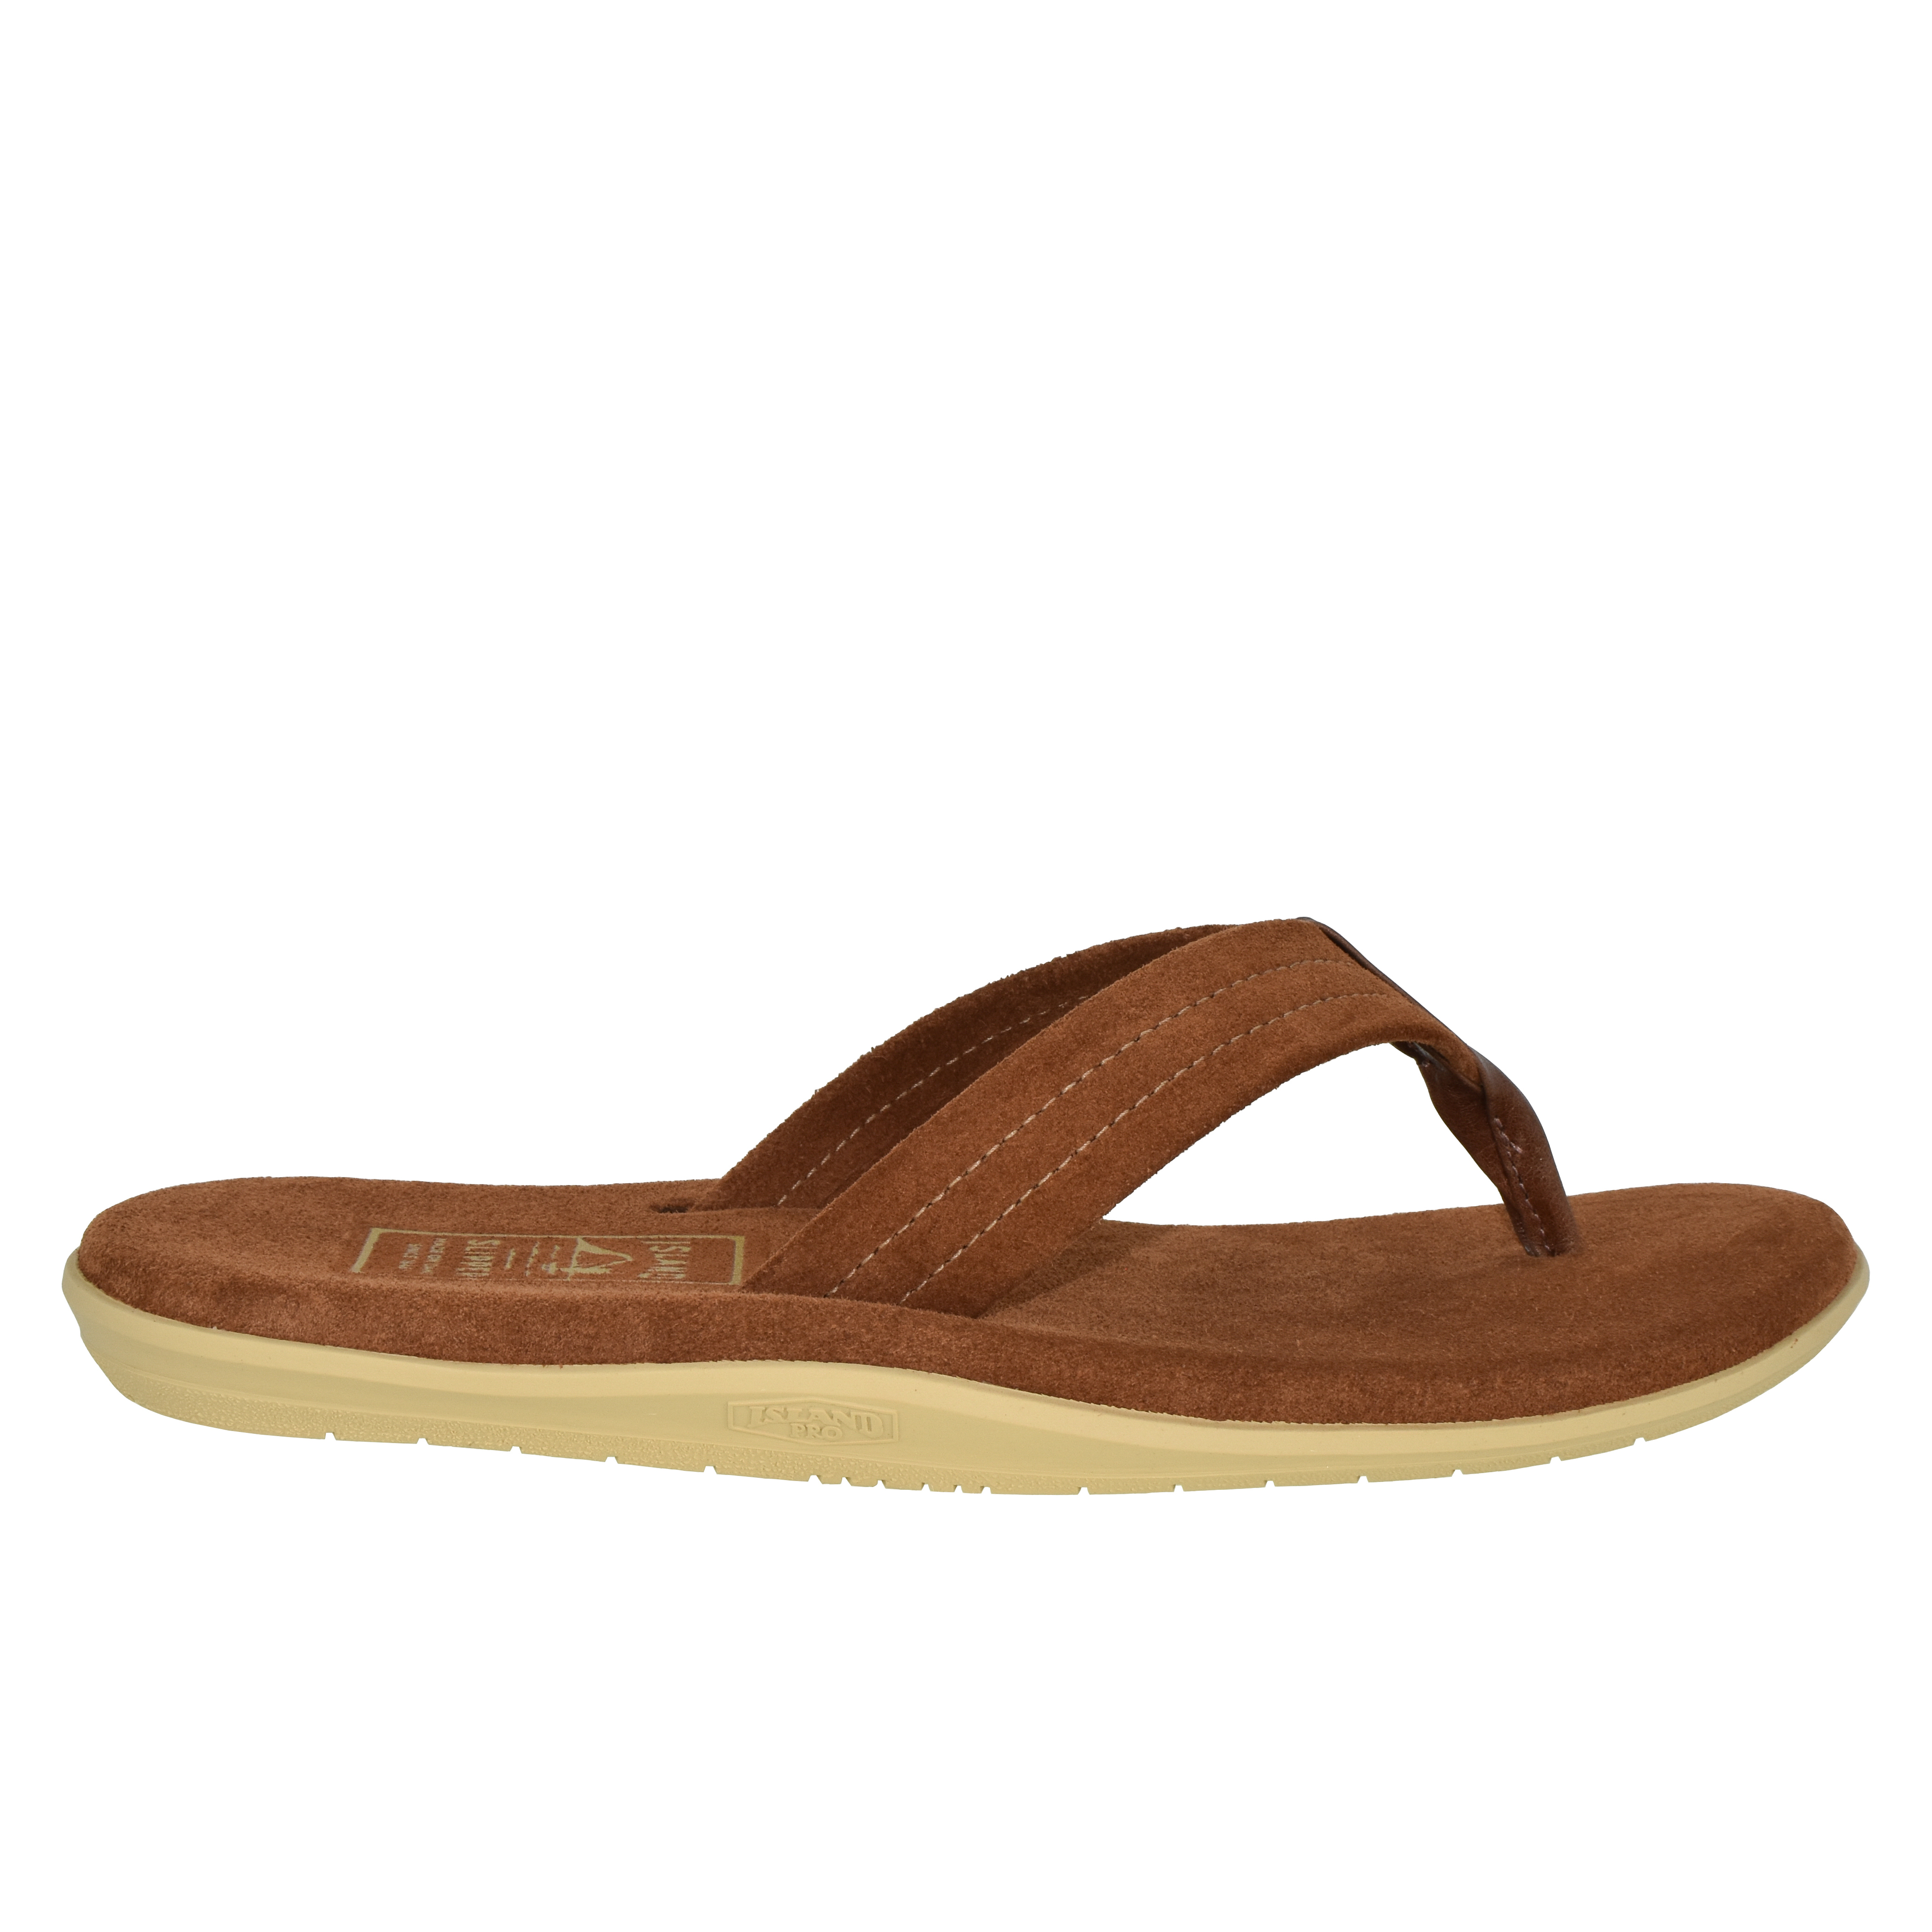 Island Slipper Classic Ultimate Suede Flip Flop - Peanut | Sandals 